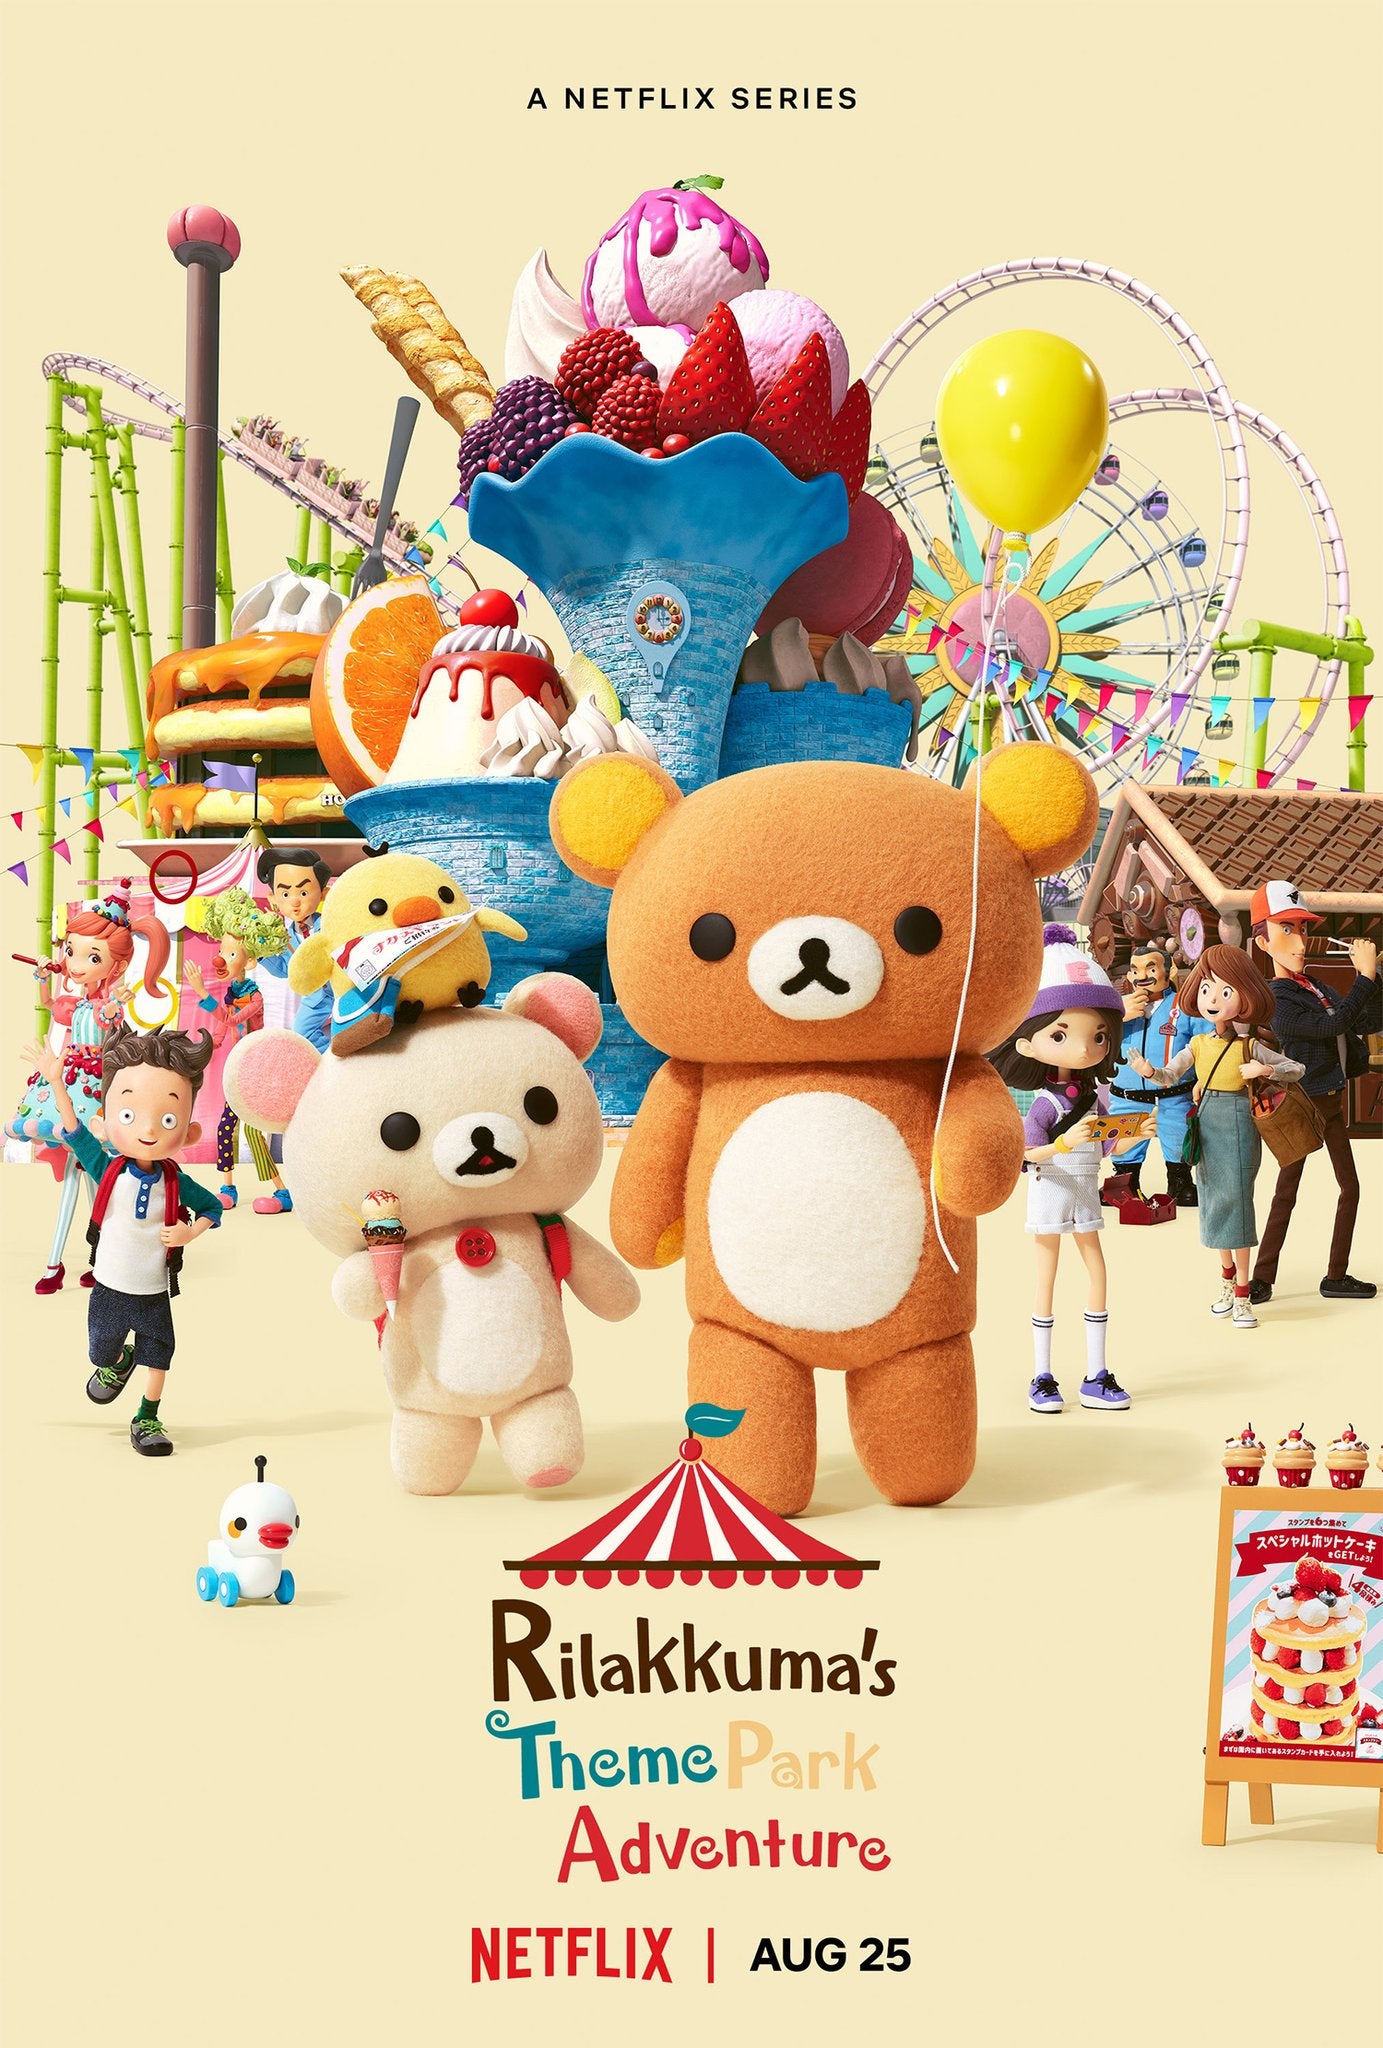 TV ratings for Rilakkuma's Theme Park Adventure (リラックマと遊園地) in Mexico. Netflix TV series